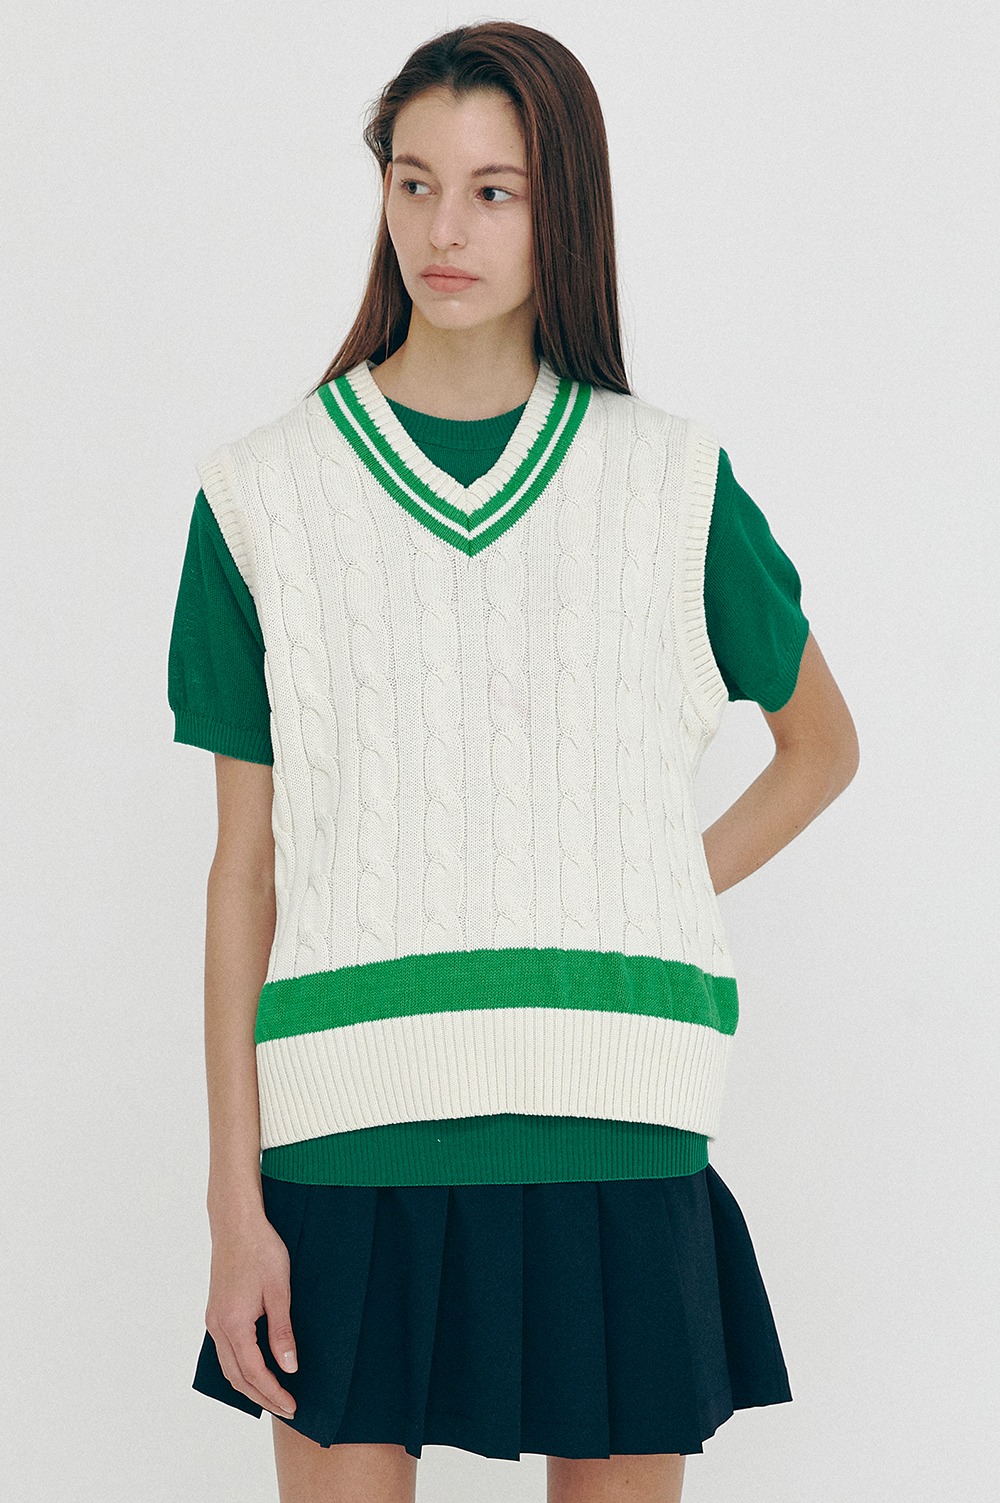 clove - [SS21 clove] Cable Knit Vest Green